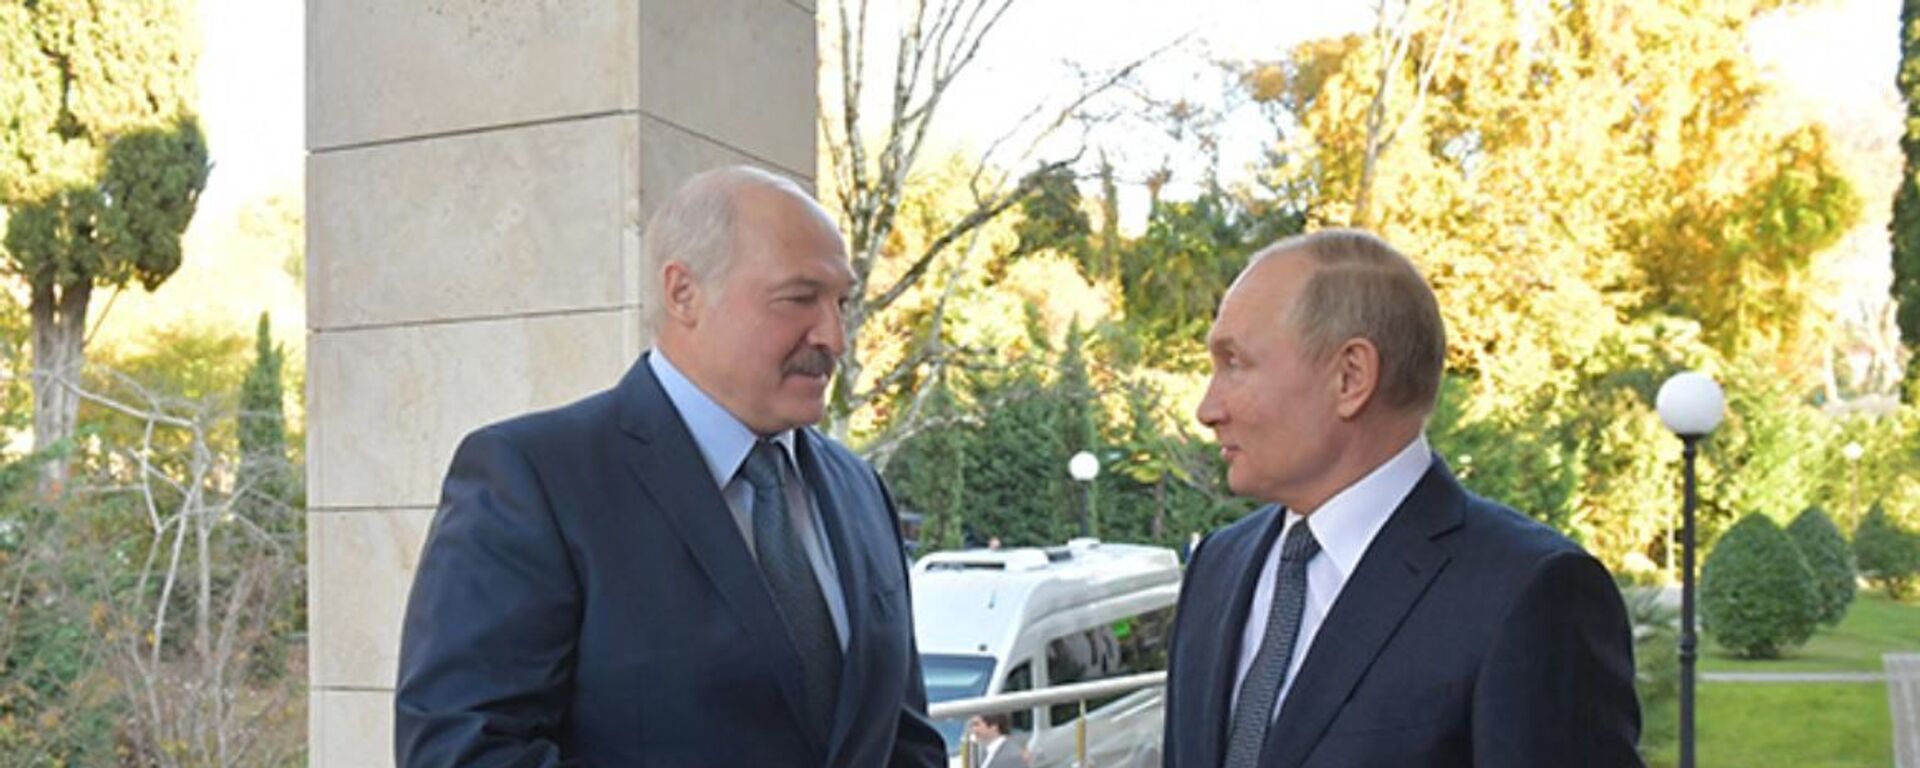 Президенты Александр Лукашенко и Владимир Путин - Sputnik Беларусь, 1920, 10.02.2021